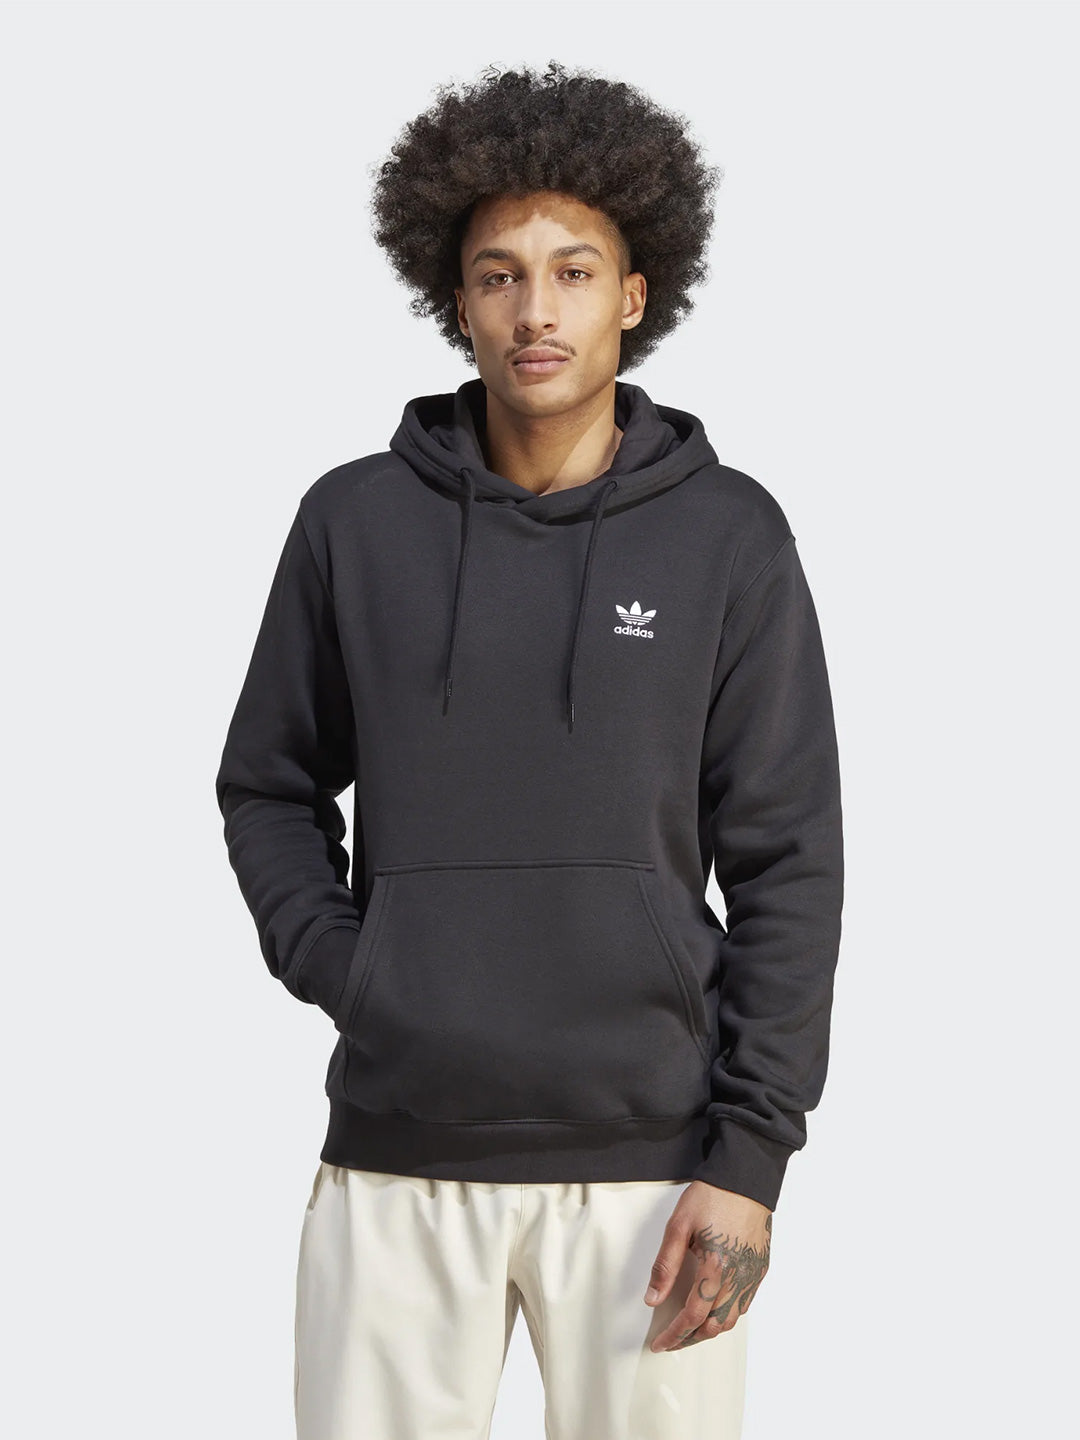 Adidas black sweatshirt with basic adjustable hood